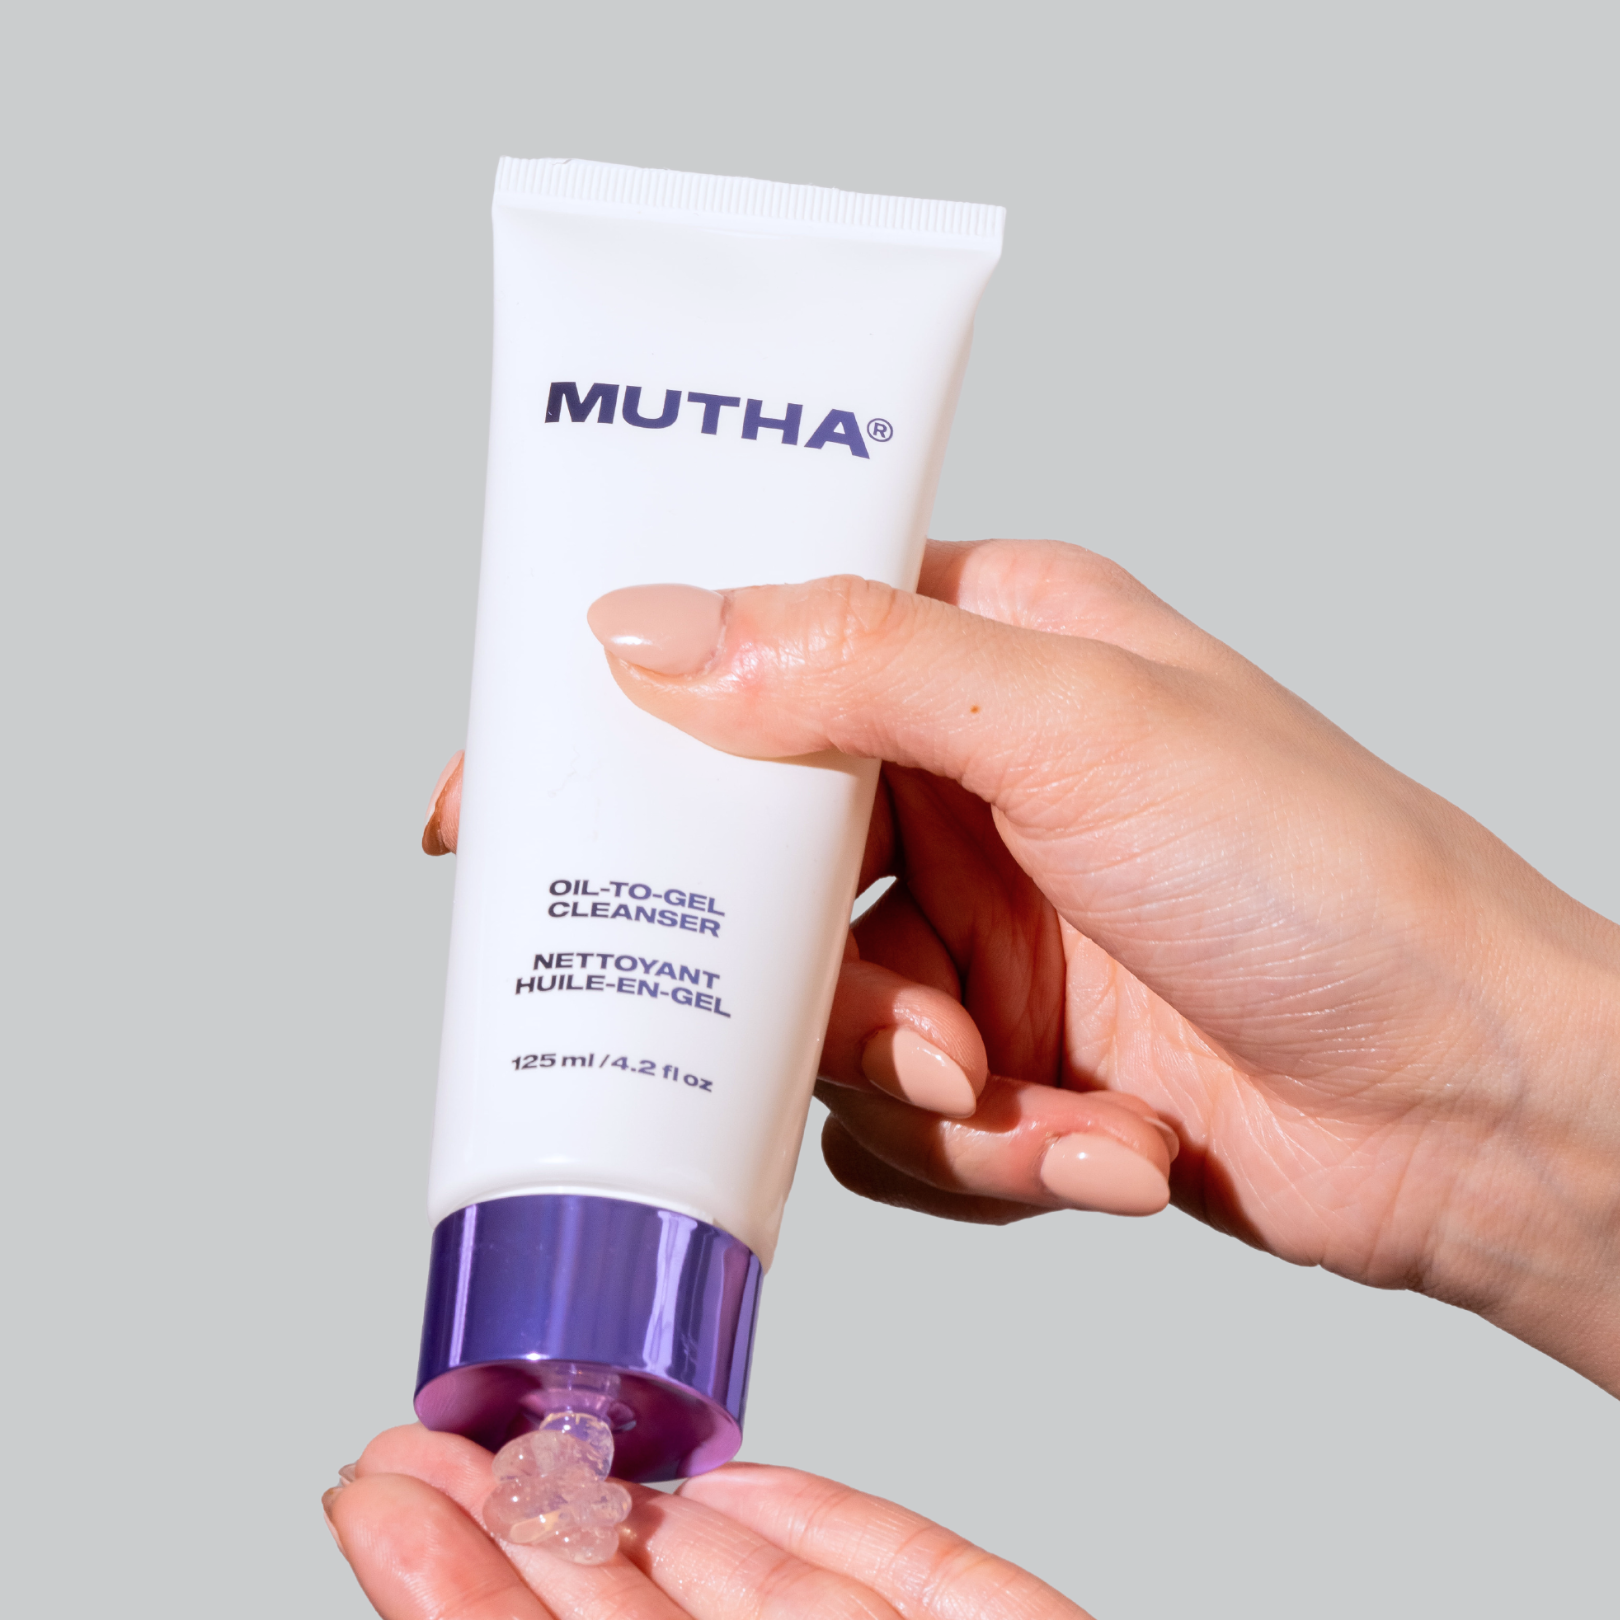 Shop Mutha Oil-to-gel Cleanser